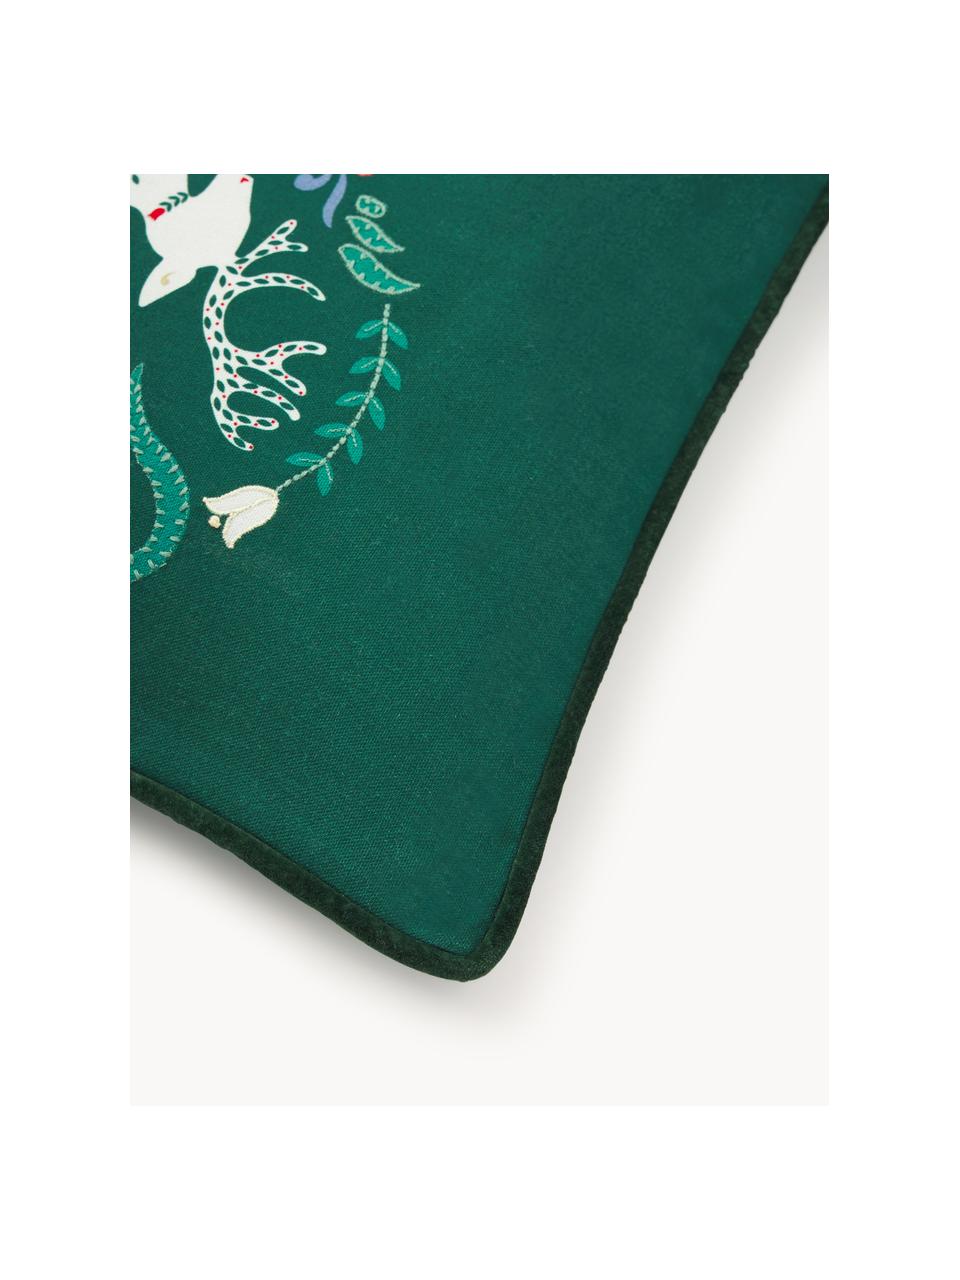 Funda de cojín invernal Deers, Funda: 100% algodón, Verde oscuro, blanco, rojo, An 45 x L 45 cm